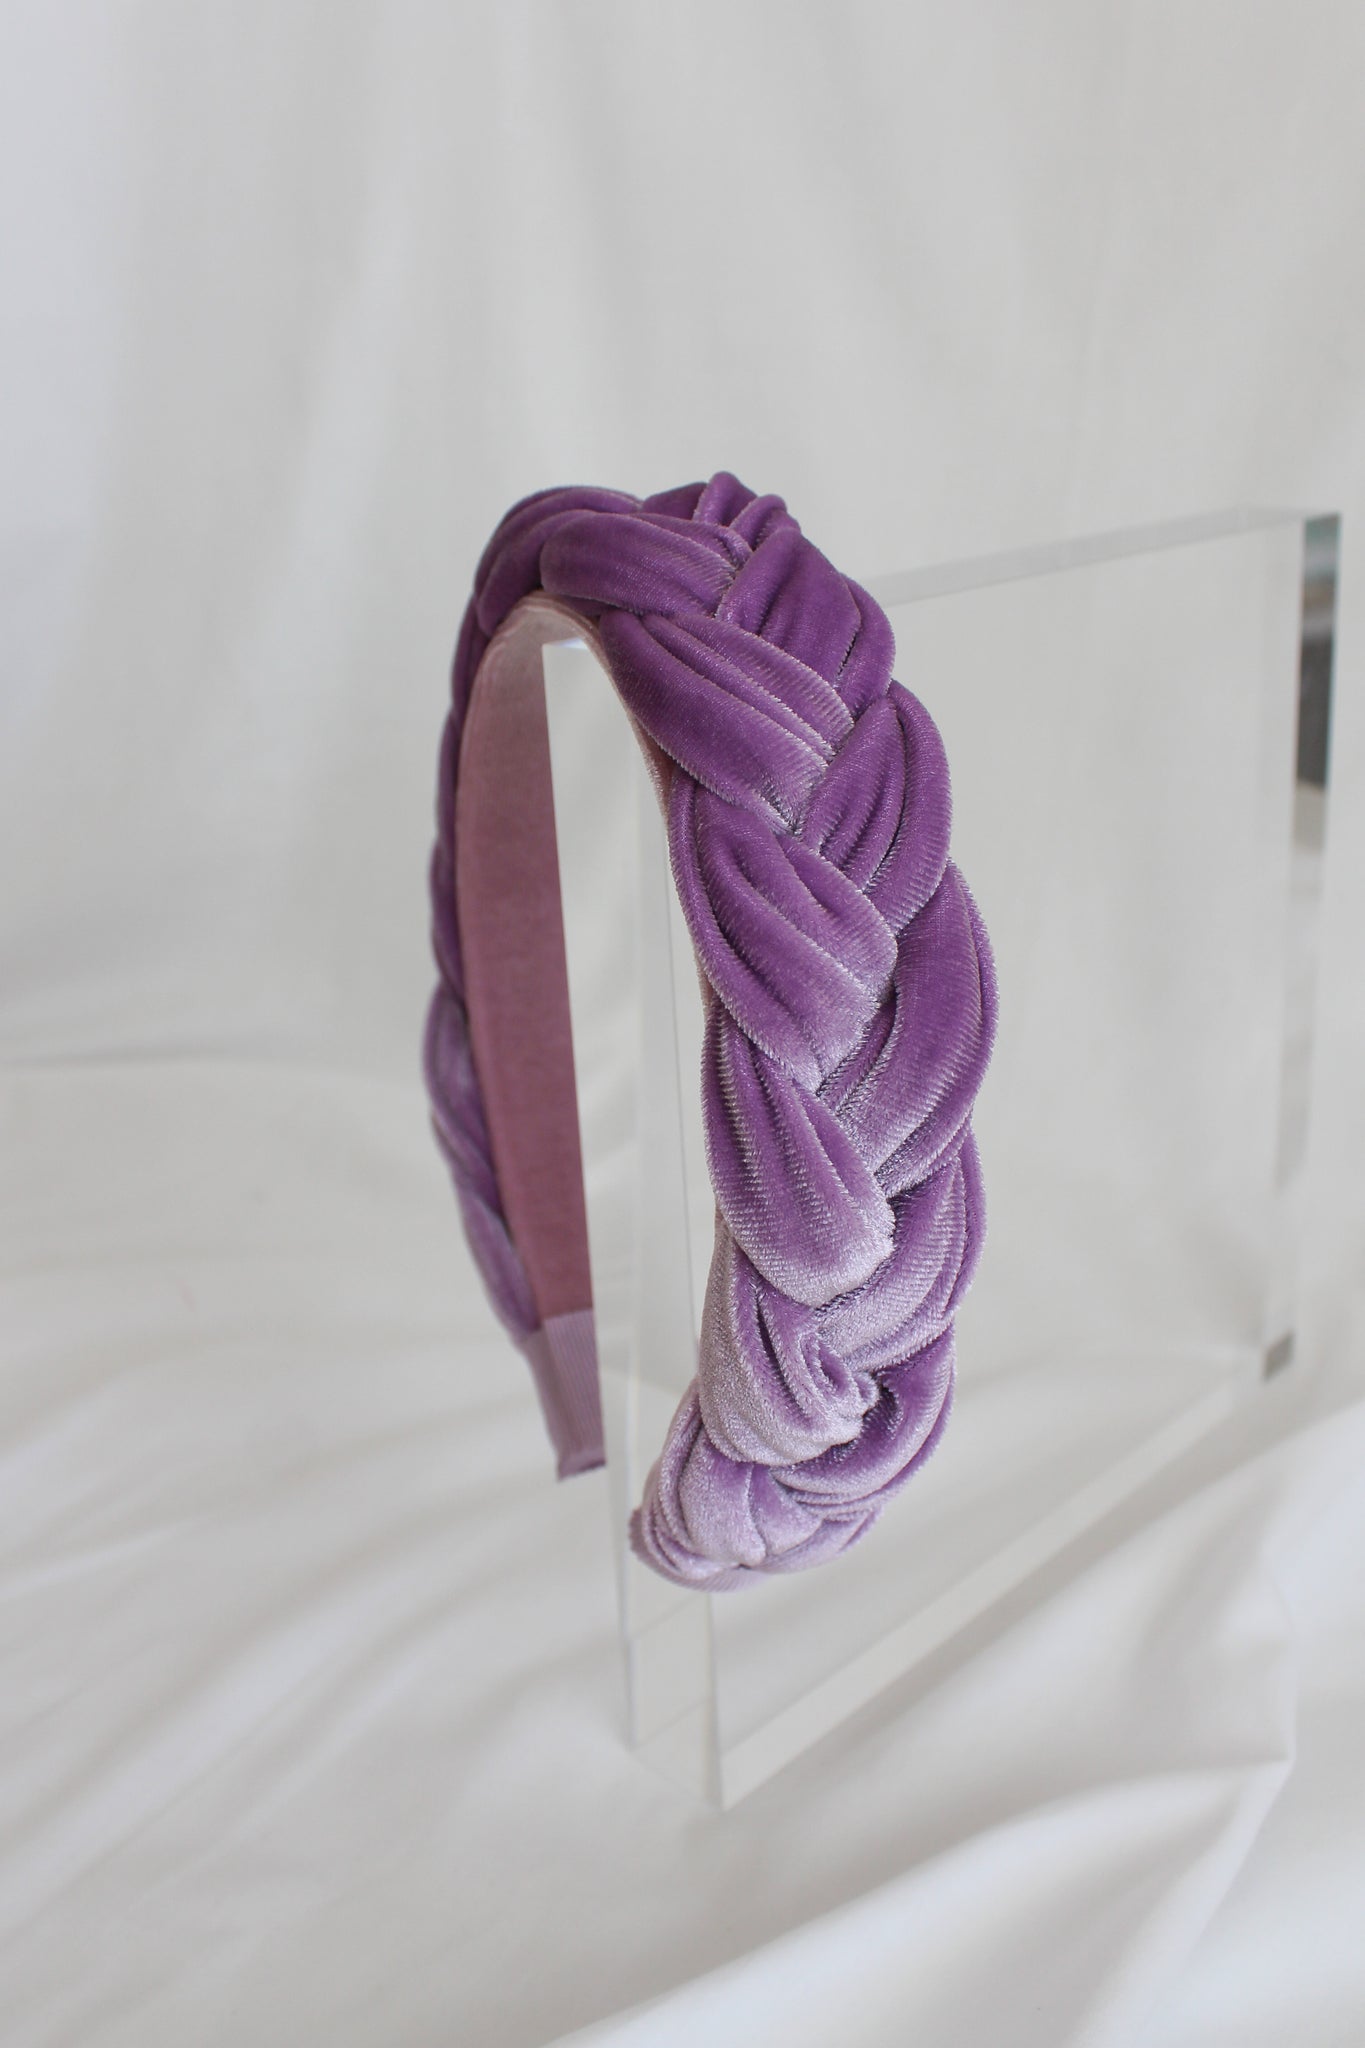 Soft Lavender Braided Headbands